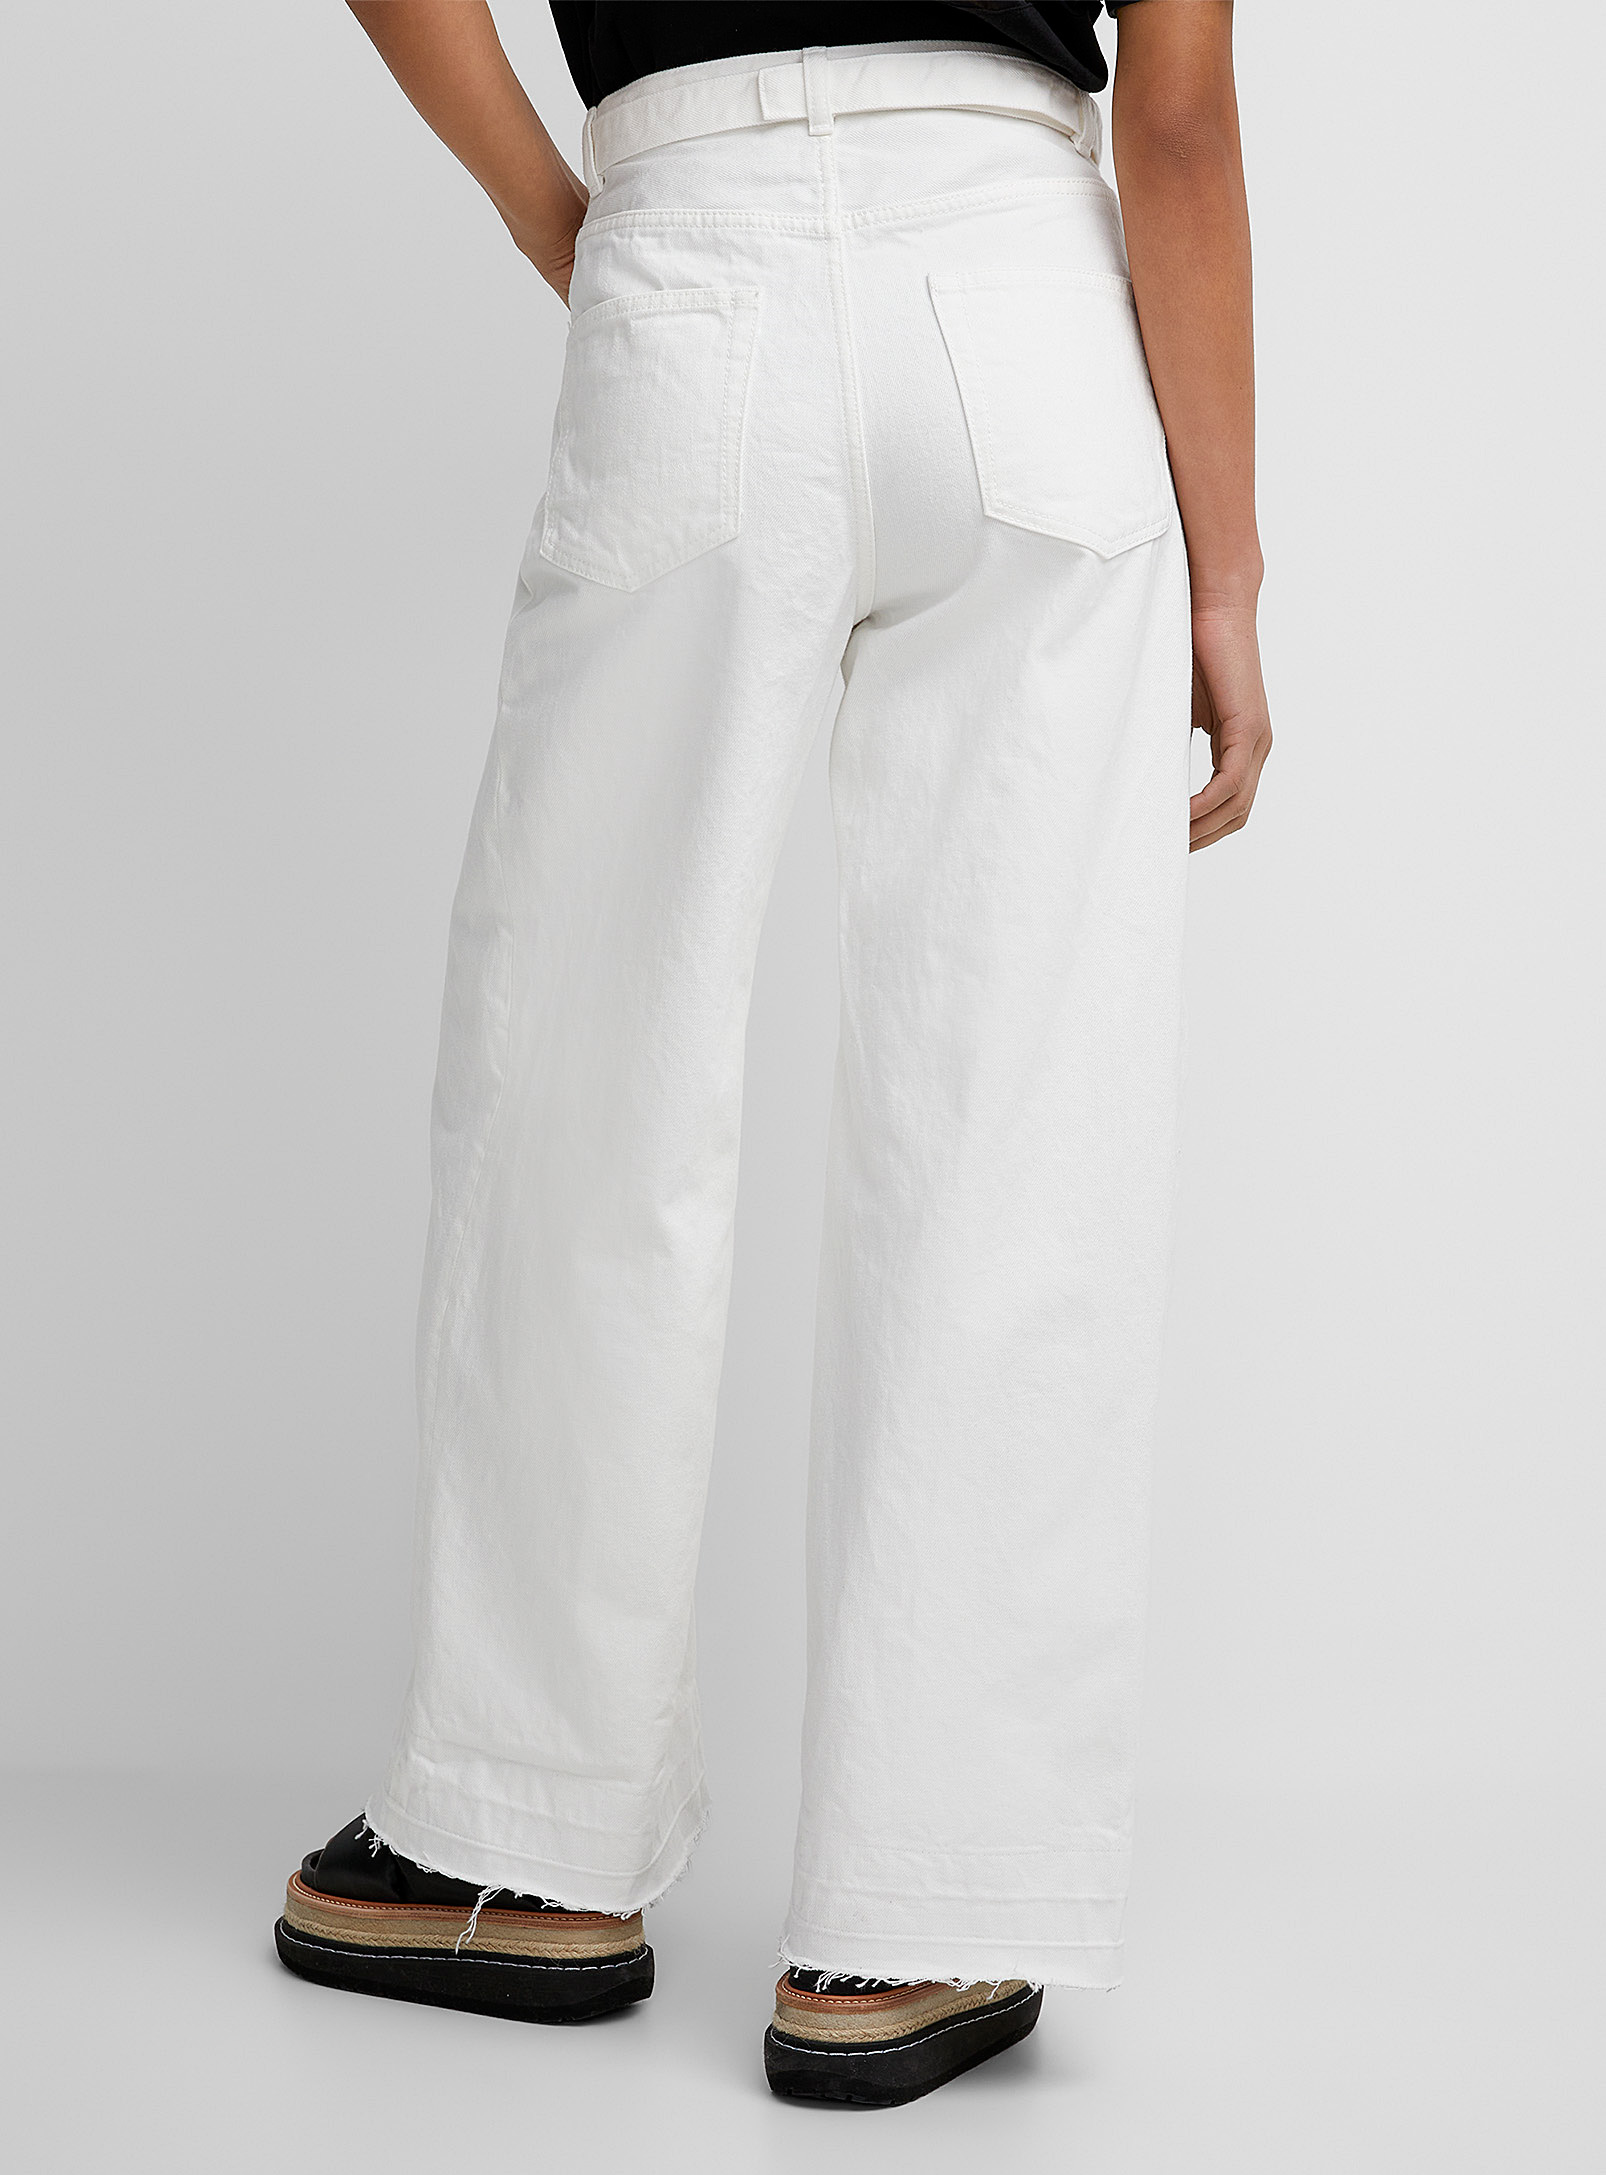 Sacai - Le jean blanc à ceinture